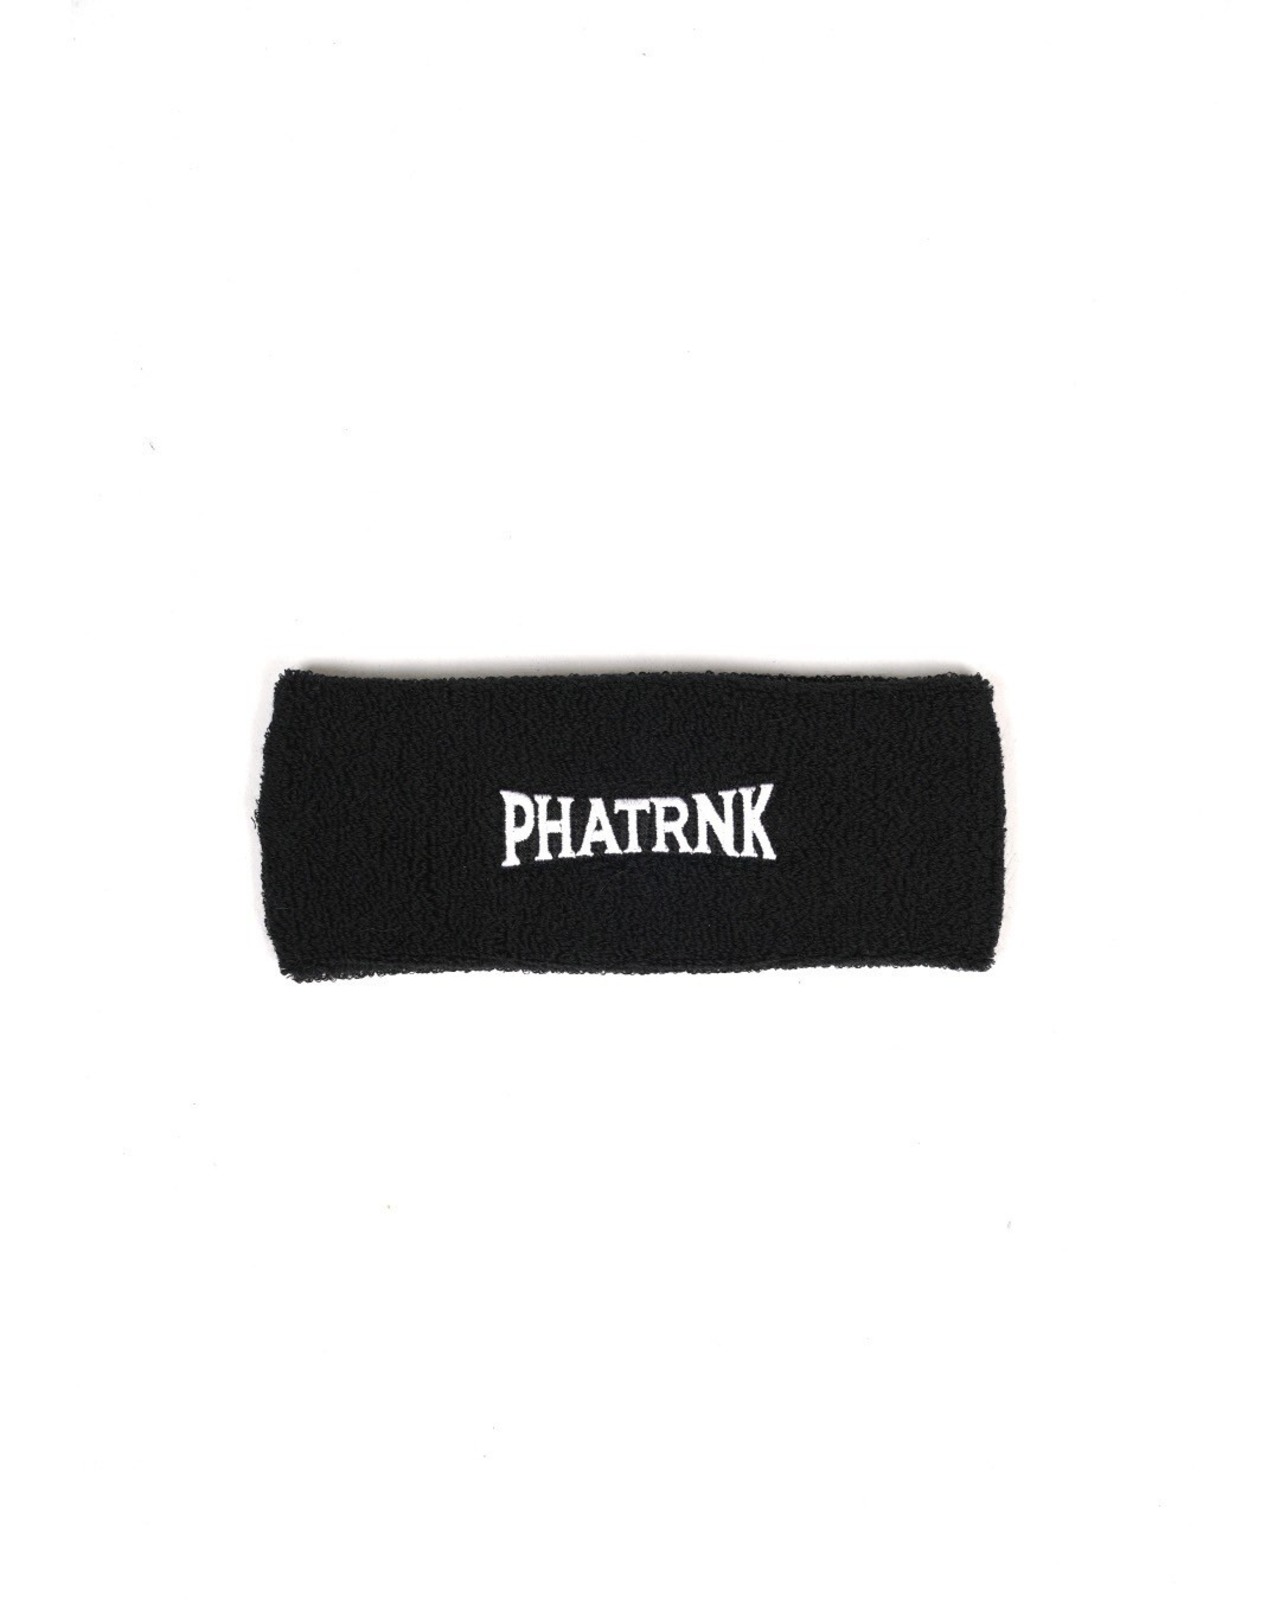 "PHATRNK × EVERLAST COLLABORATION" HAIR BAND